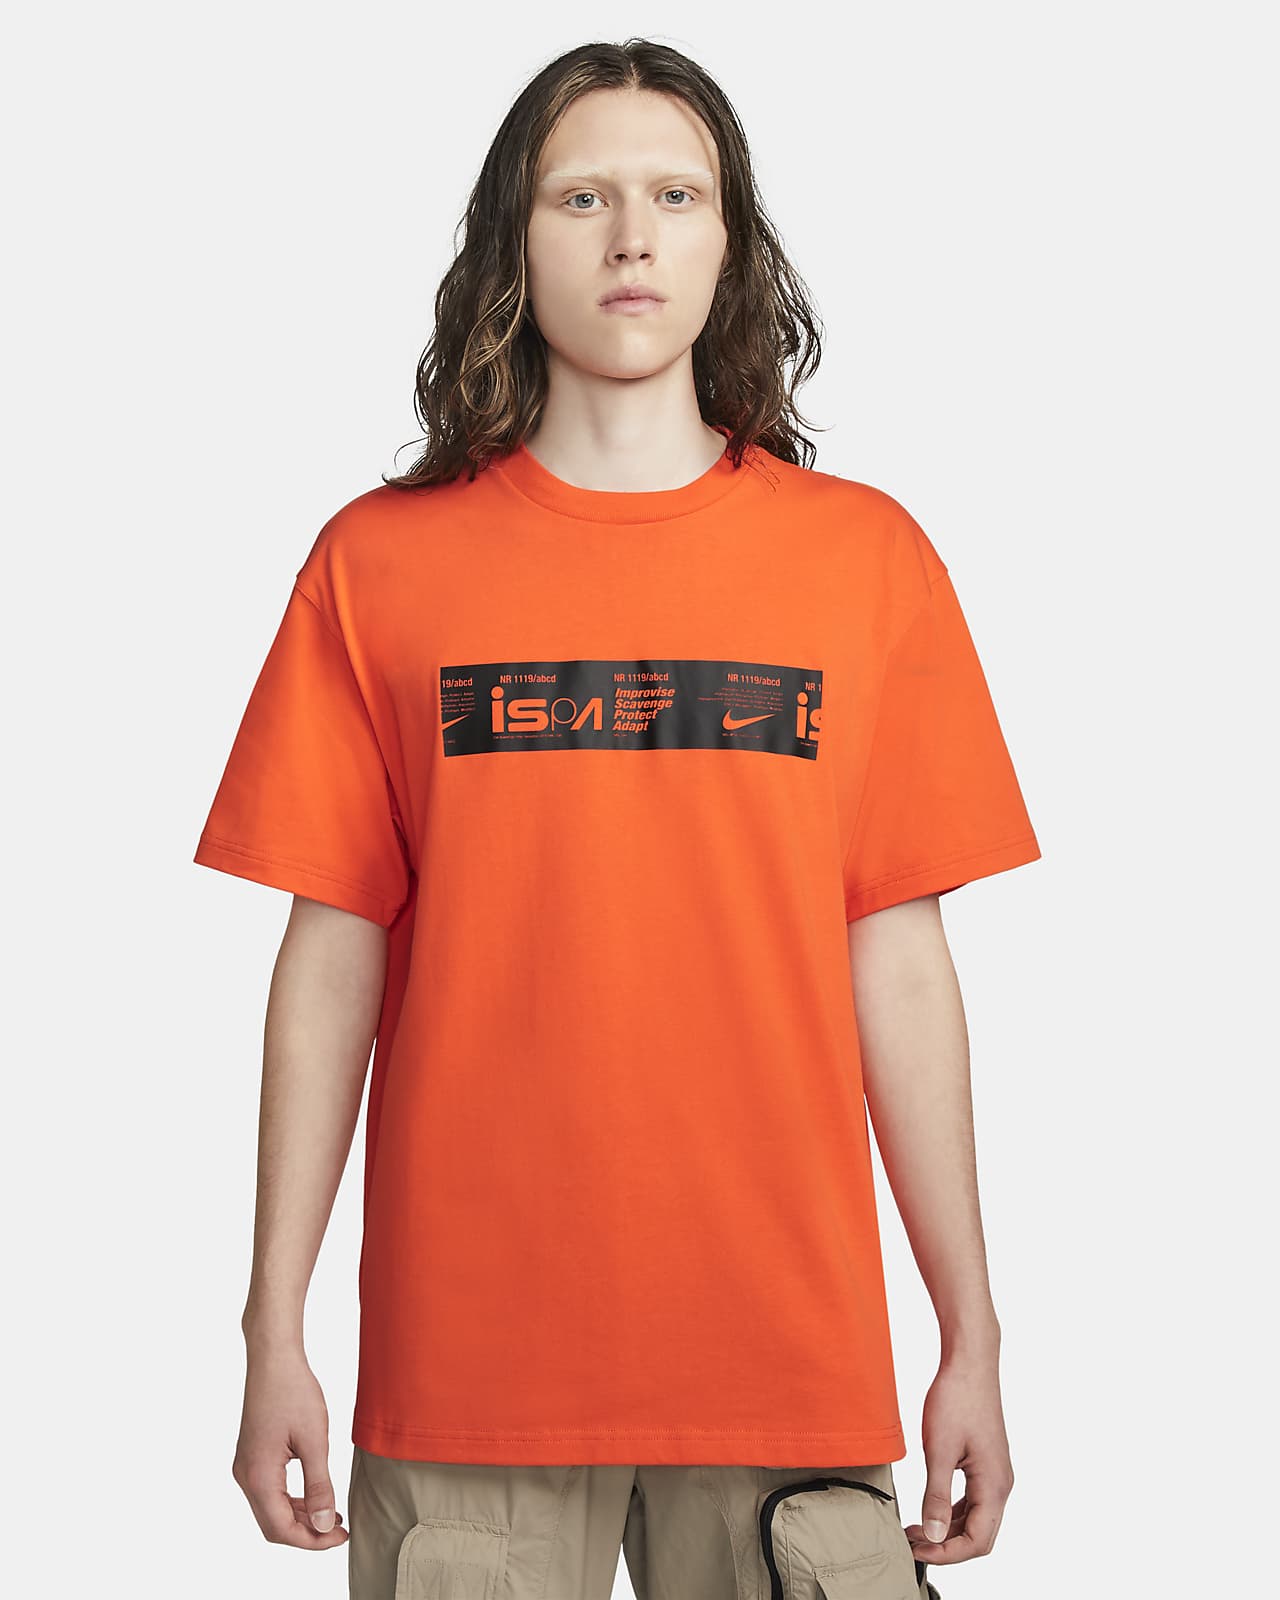 Nike ISPA Men's Graphic T-Shirt.